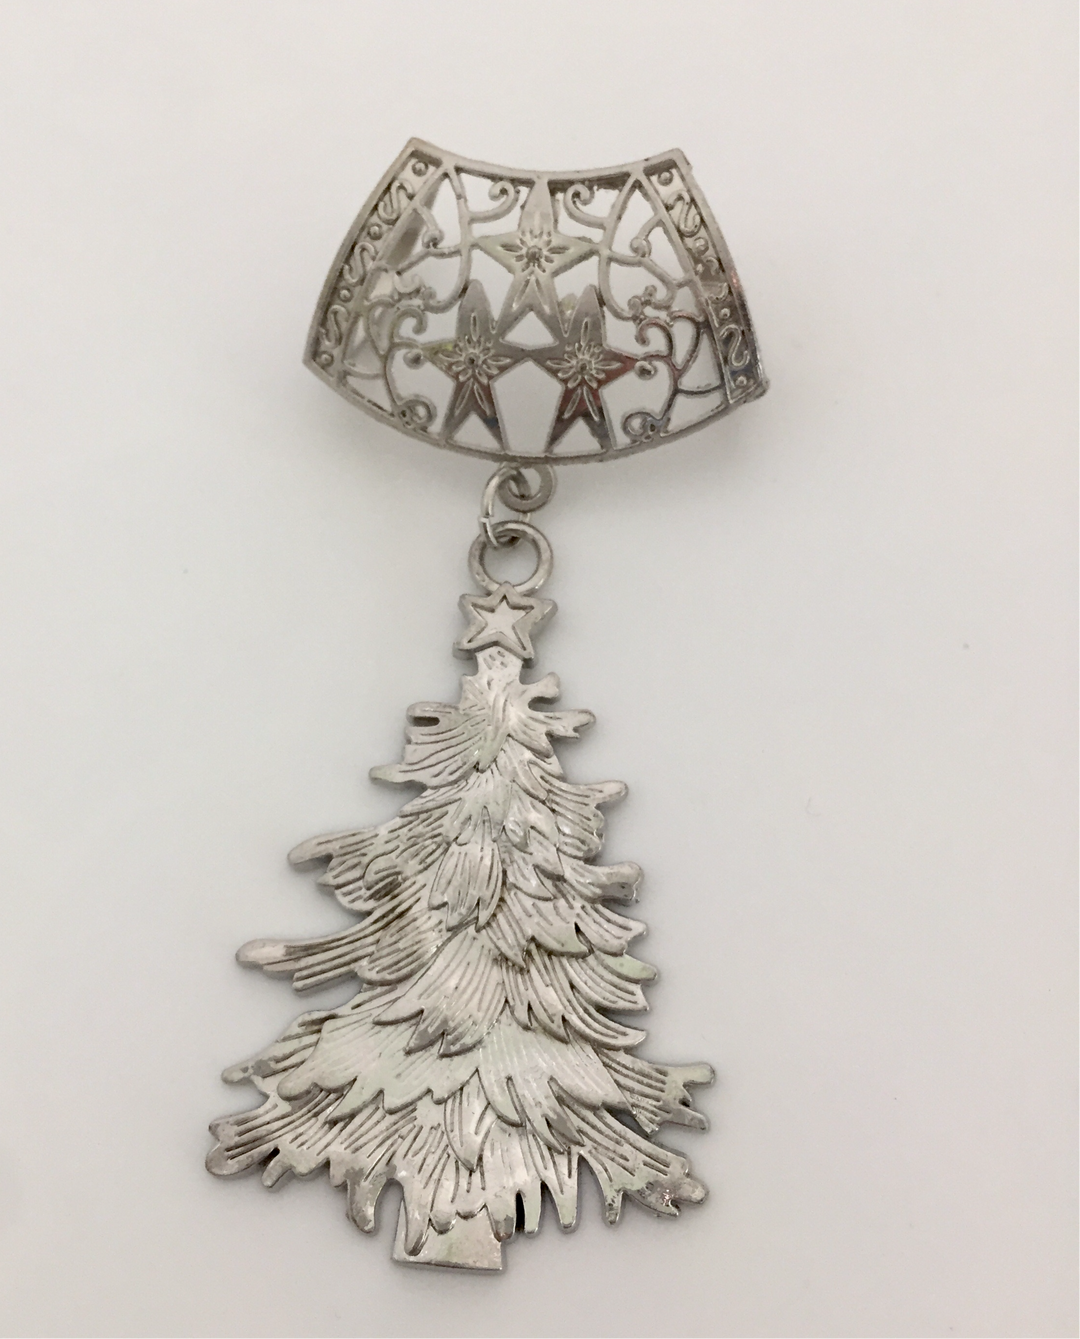 Shiny Silver Christmas Tree Scarf Bail Dangle Charm Pendant